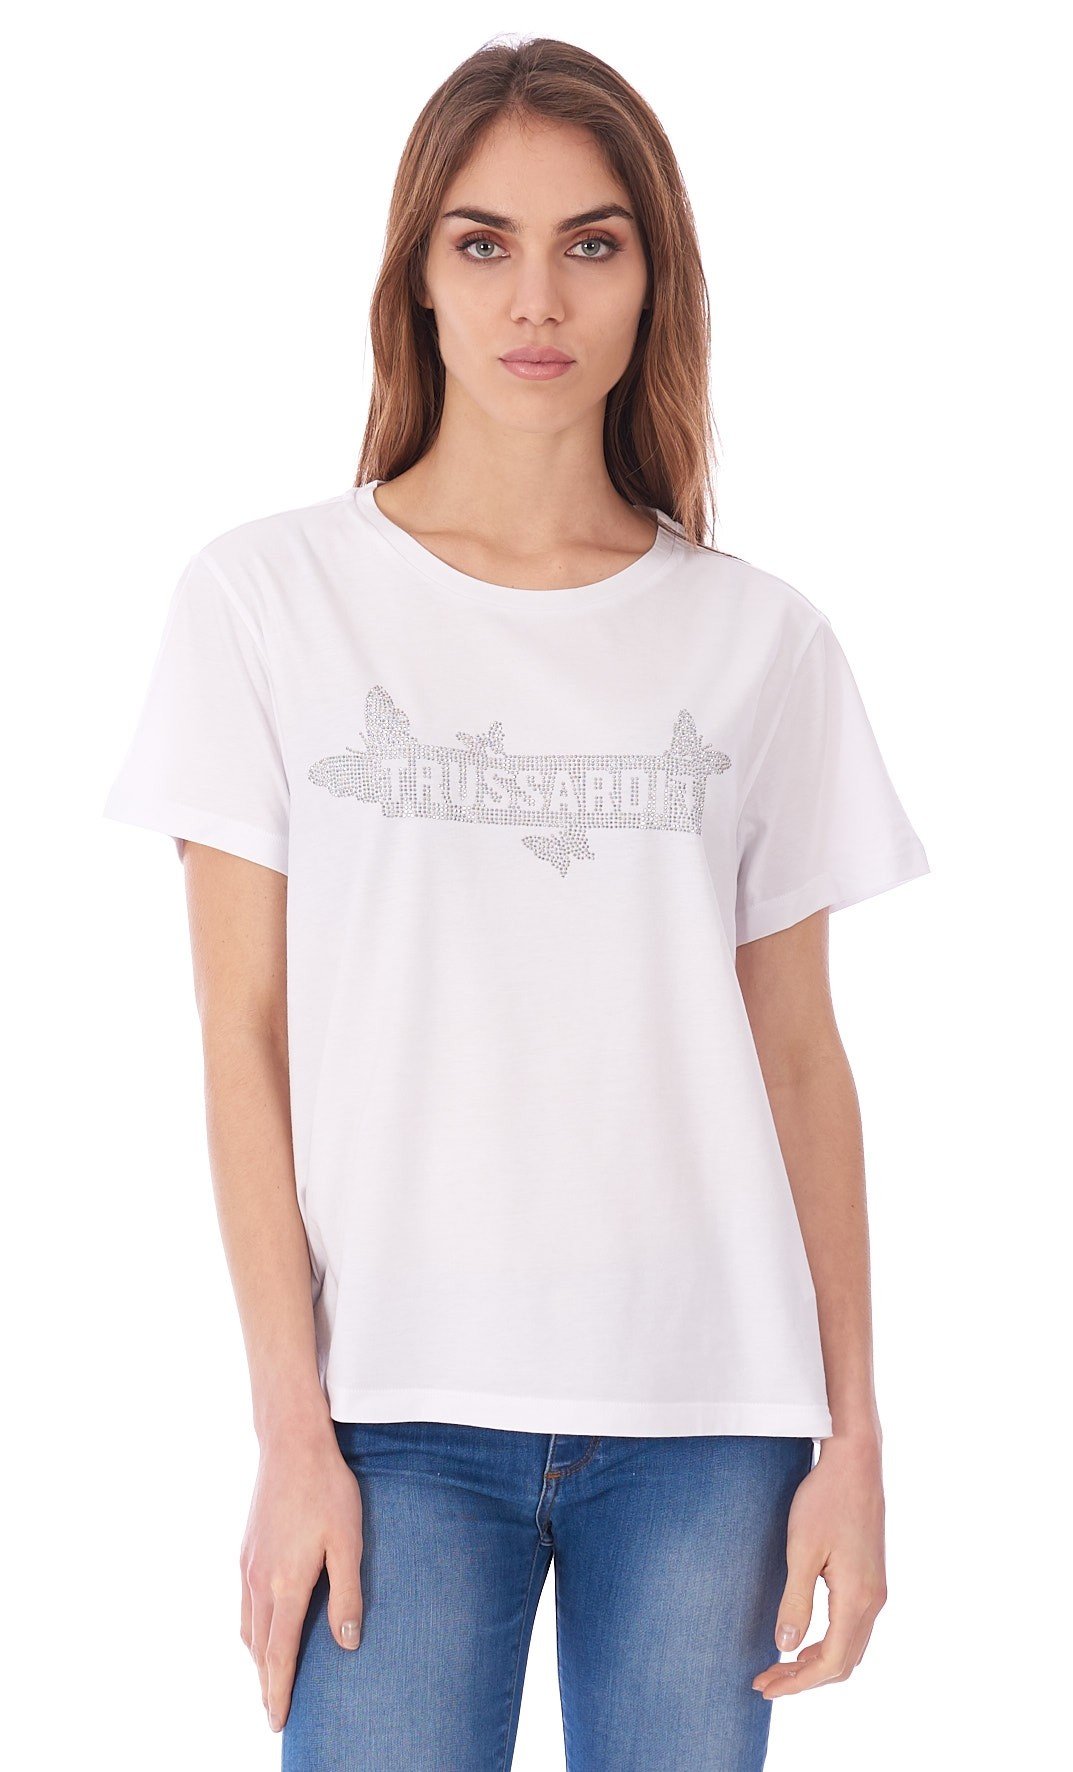 Women's Trussardi Jeans white t-shirt boxy fit 56T00232